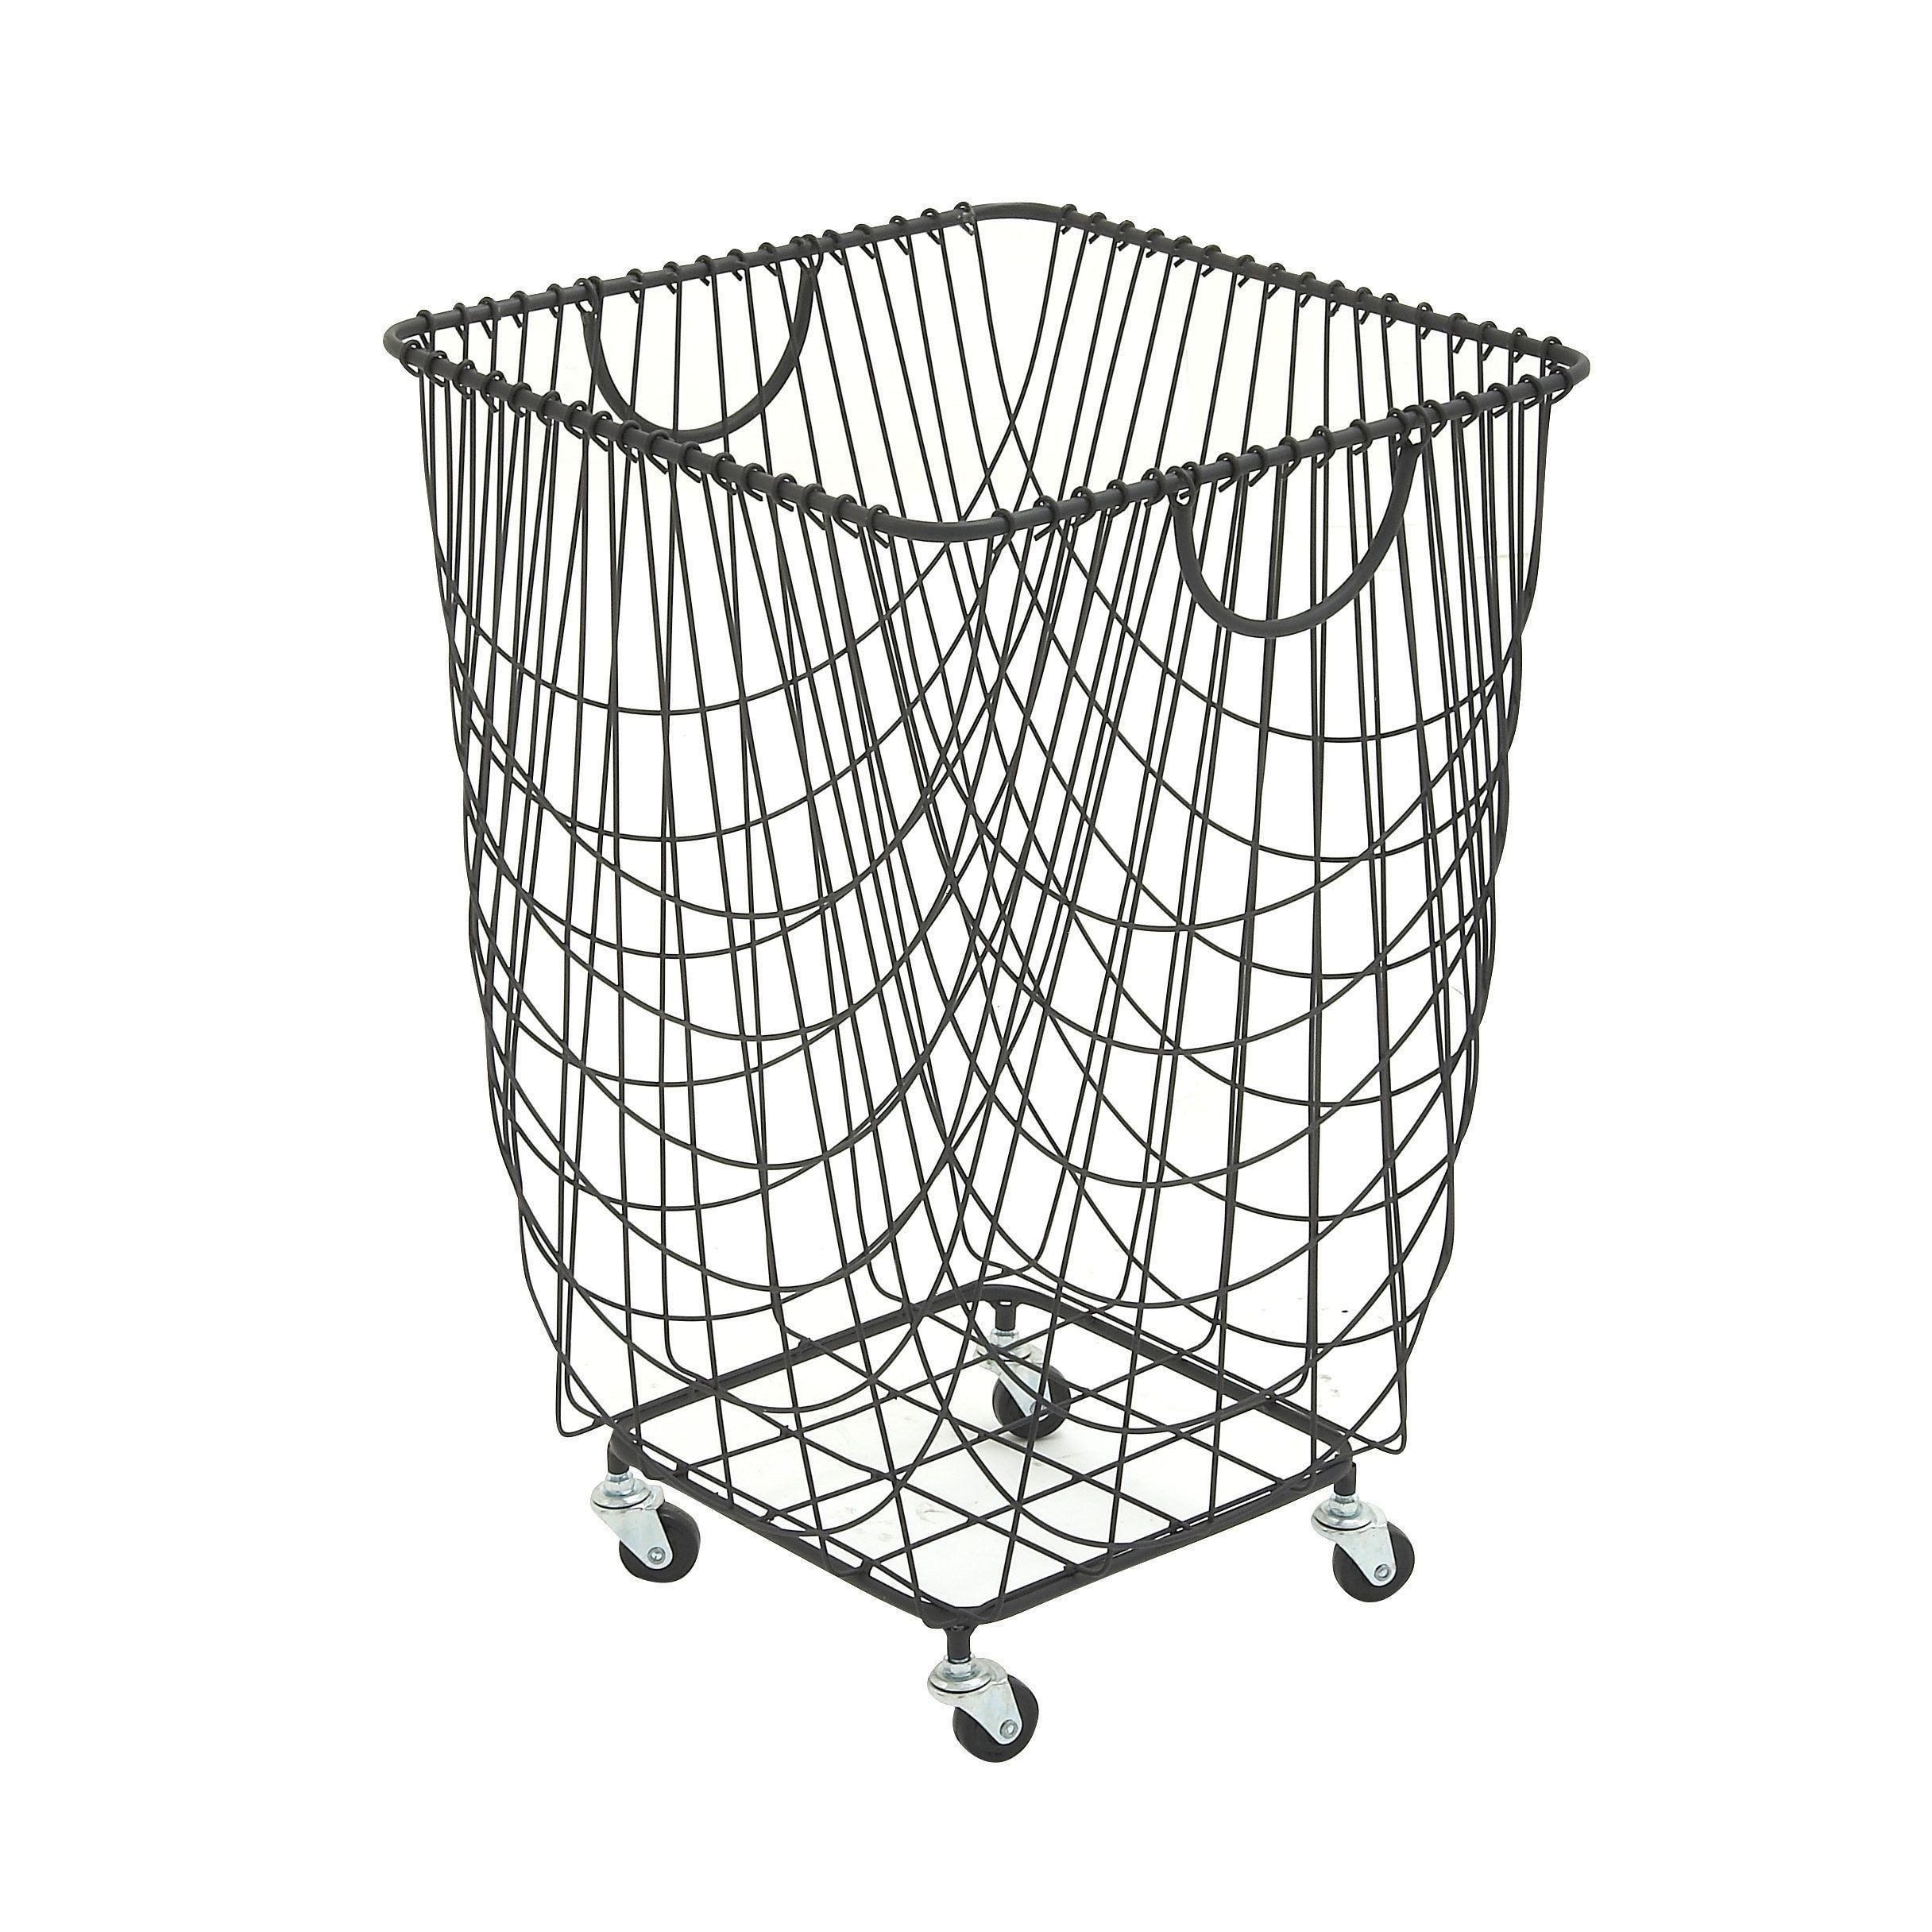 Large rectangular black metal laundry basket with wheels